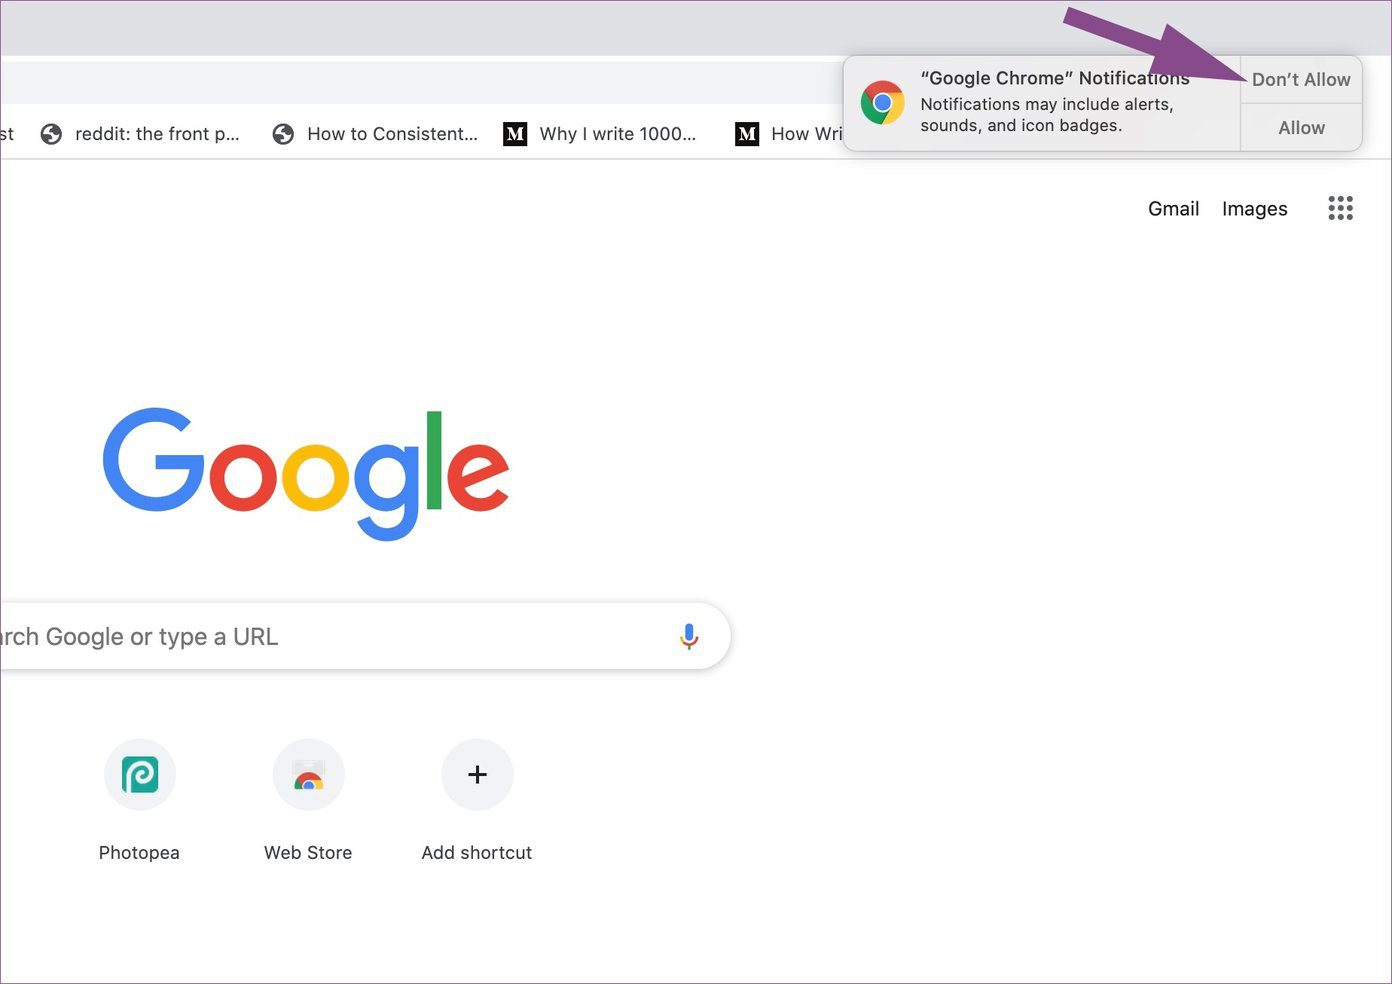 Google chrome notification allow